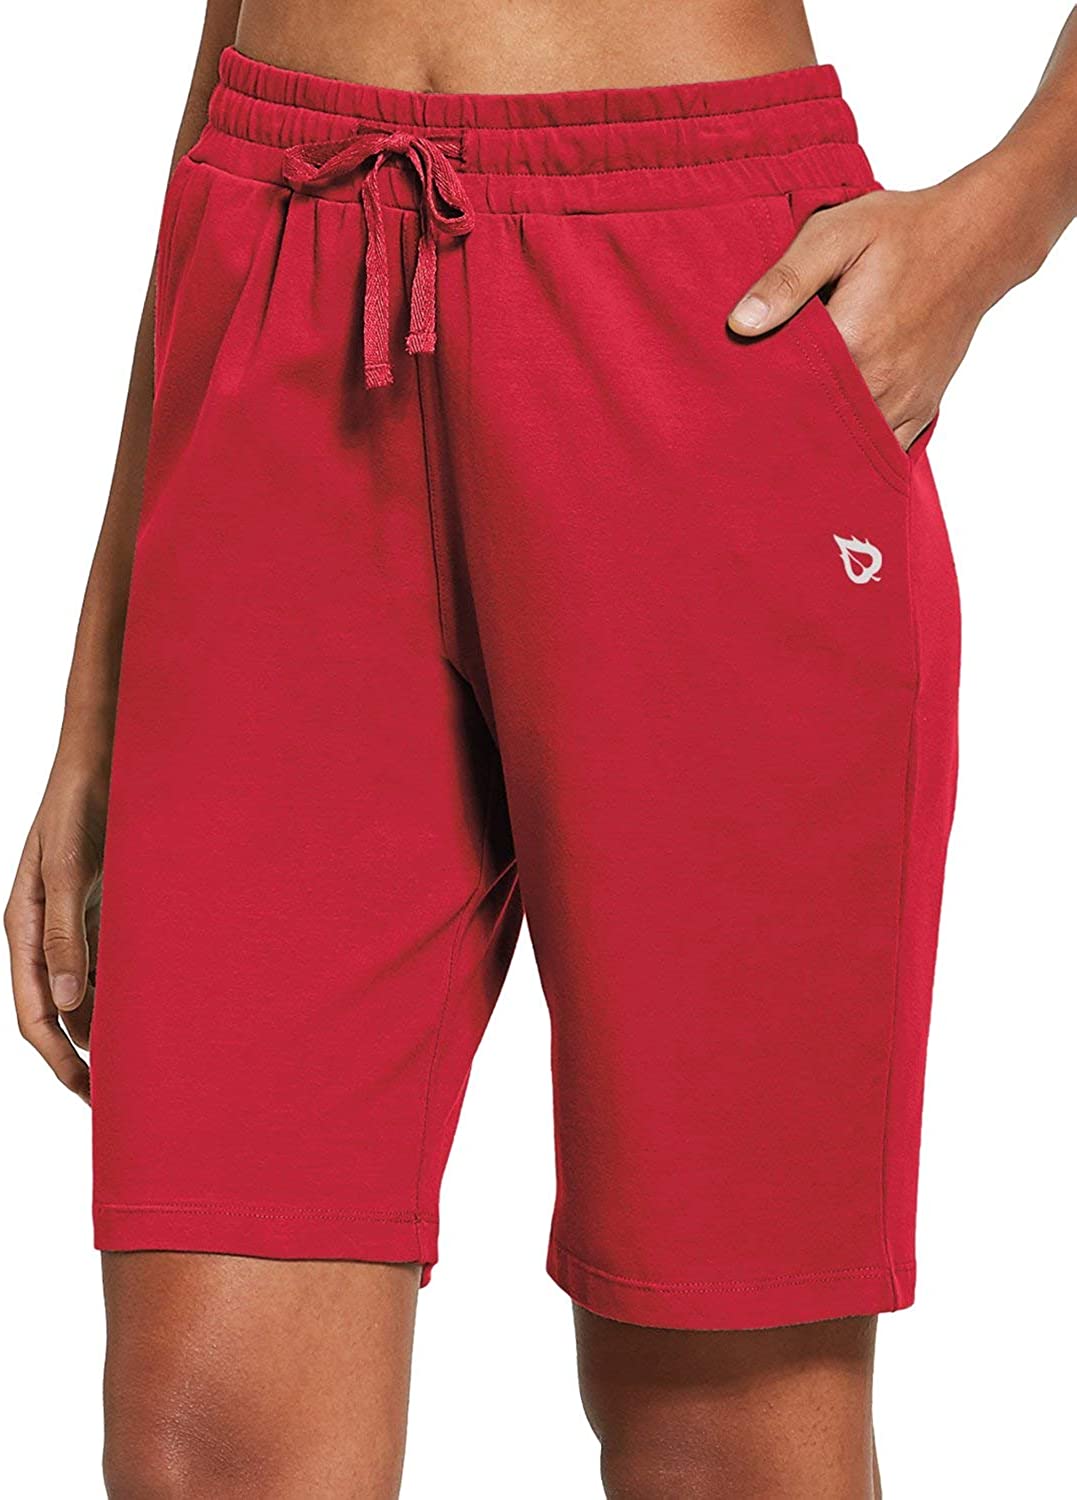 BALEAF Women's Bermuda Shorts Long Cotton Jersey with Pockets